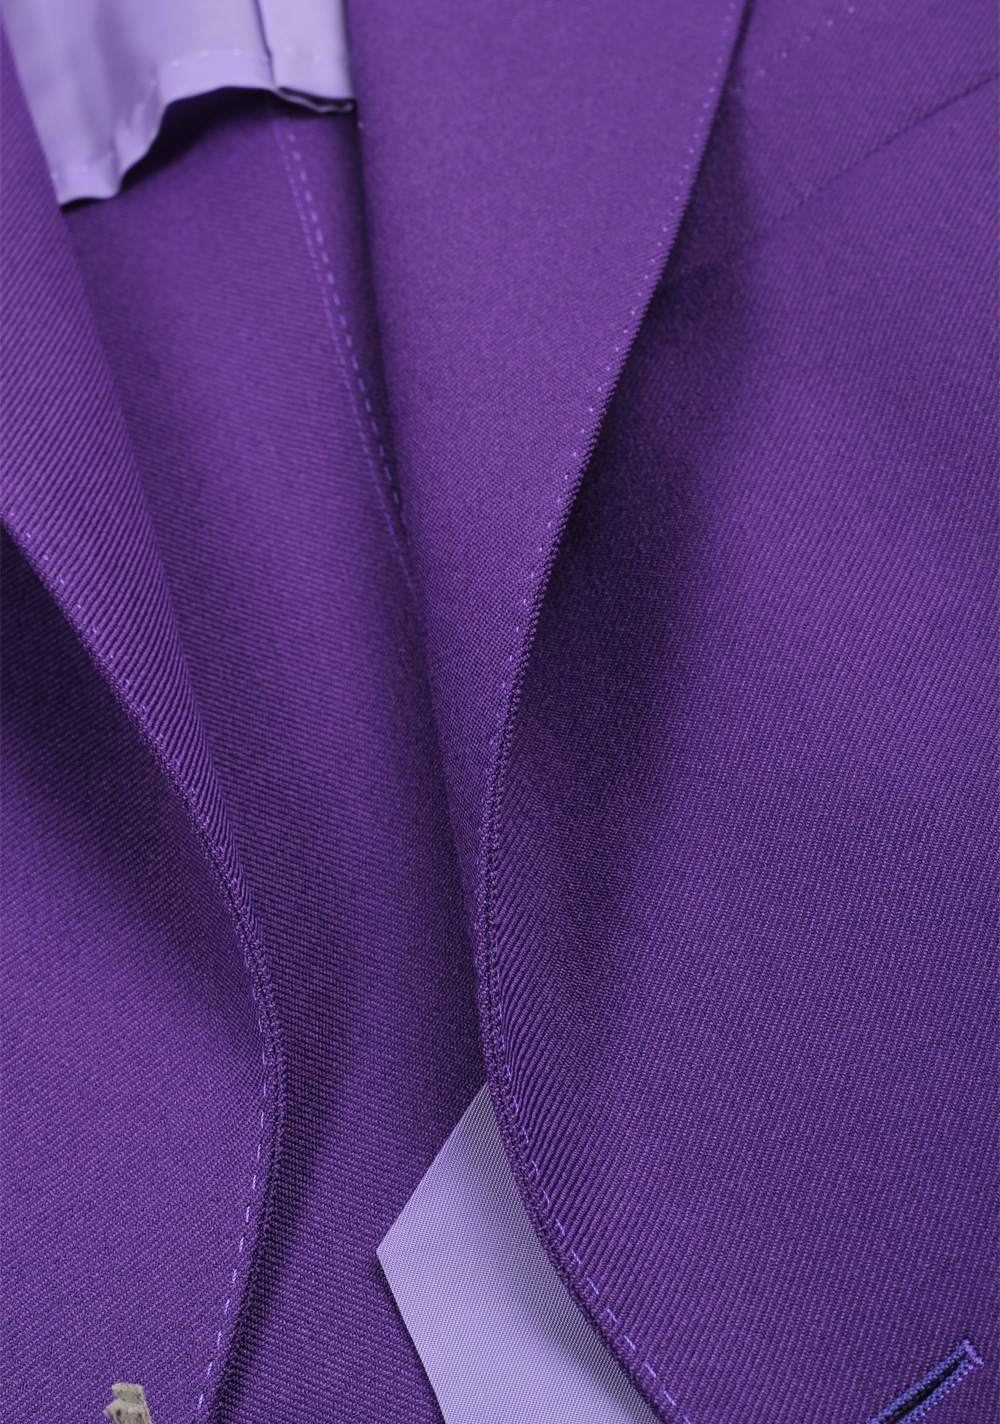 TOM FORD Atticus Lilac Sport Coat Size 46 / 36R U.S. | Costume Limité